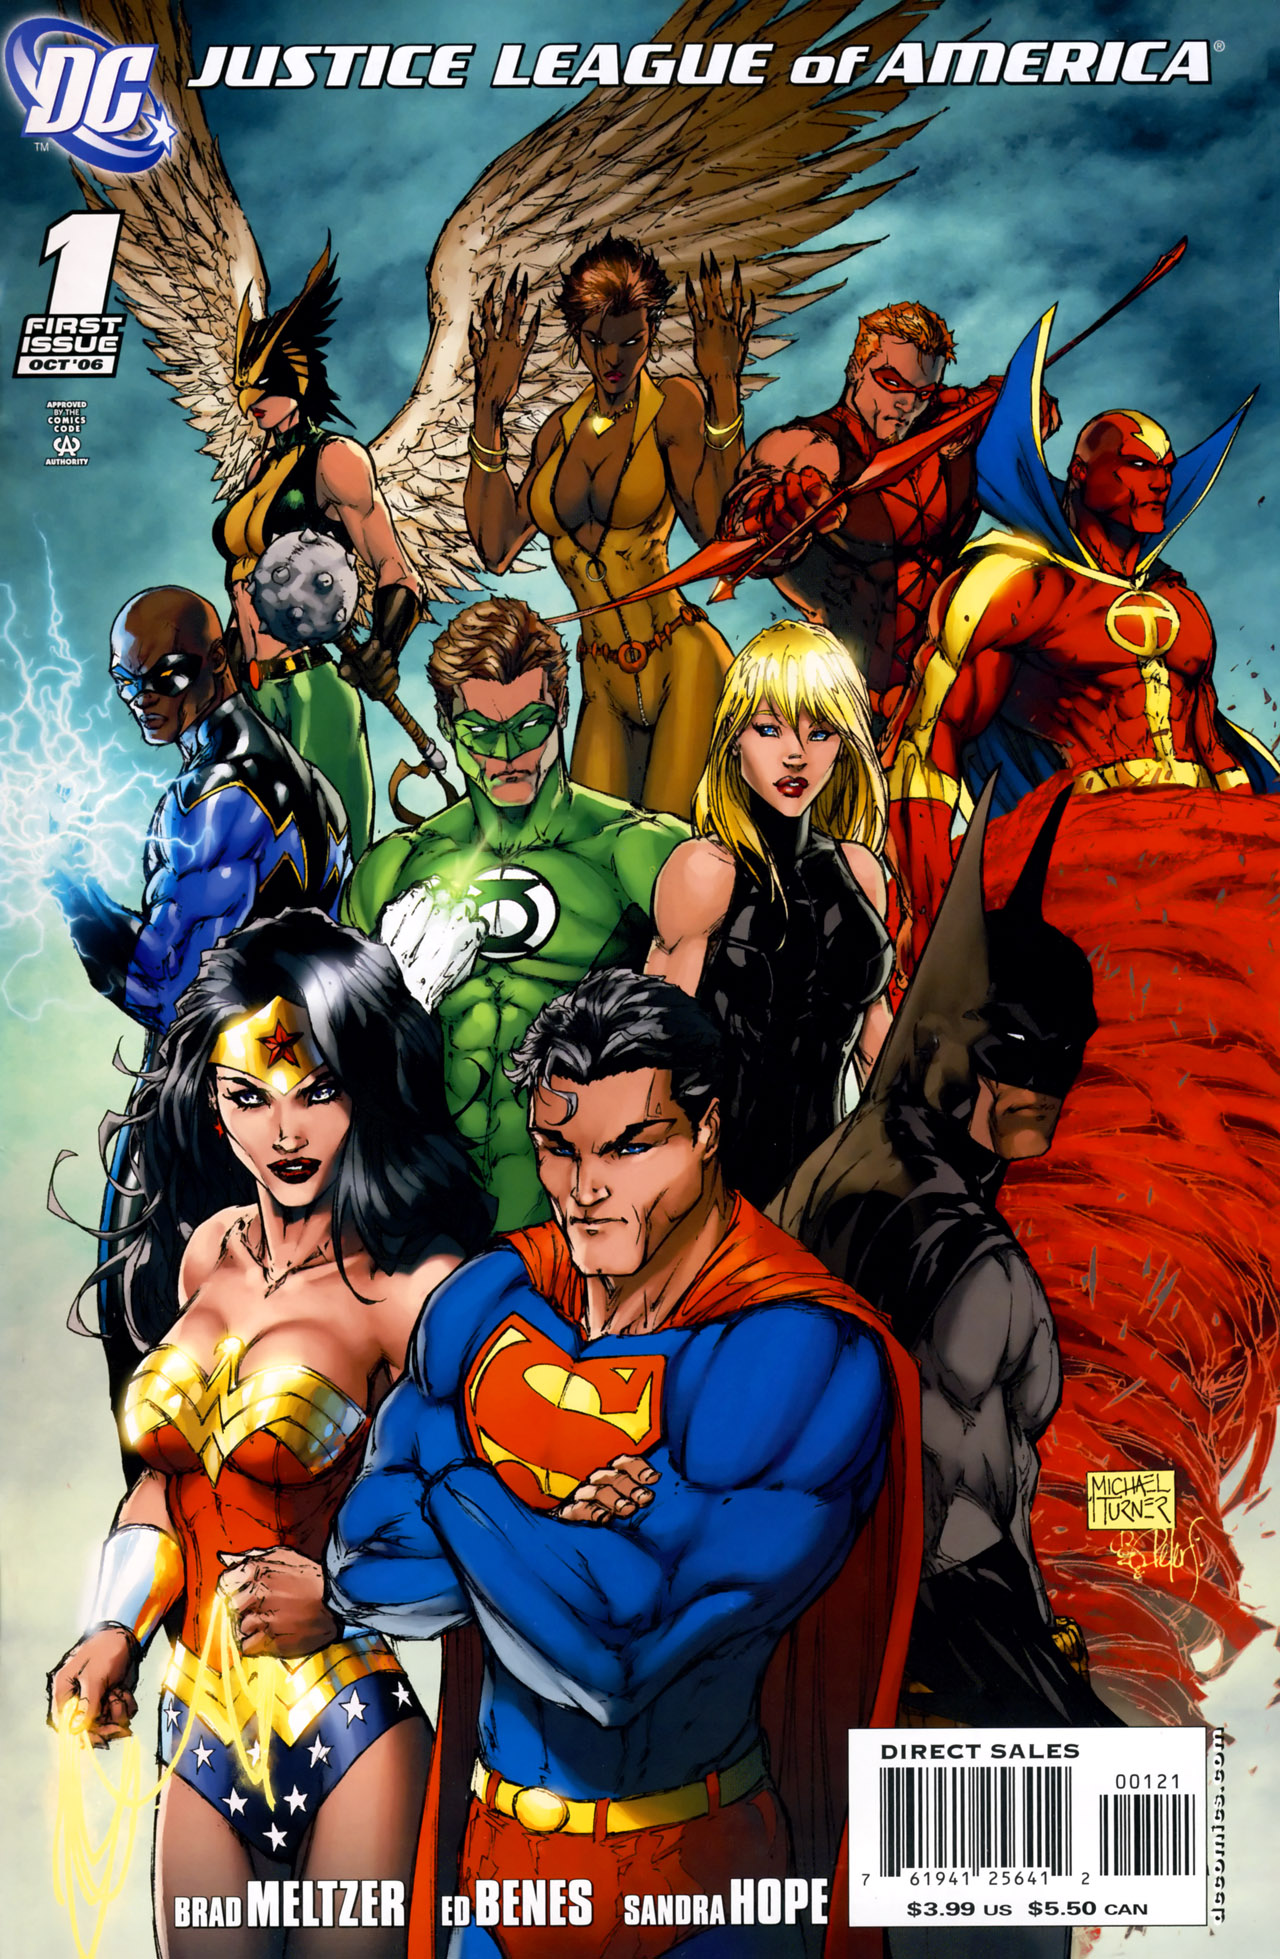 Justice League International - Wikipedia